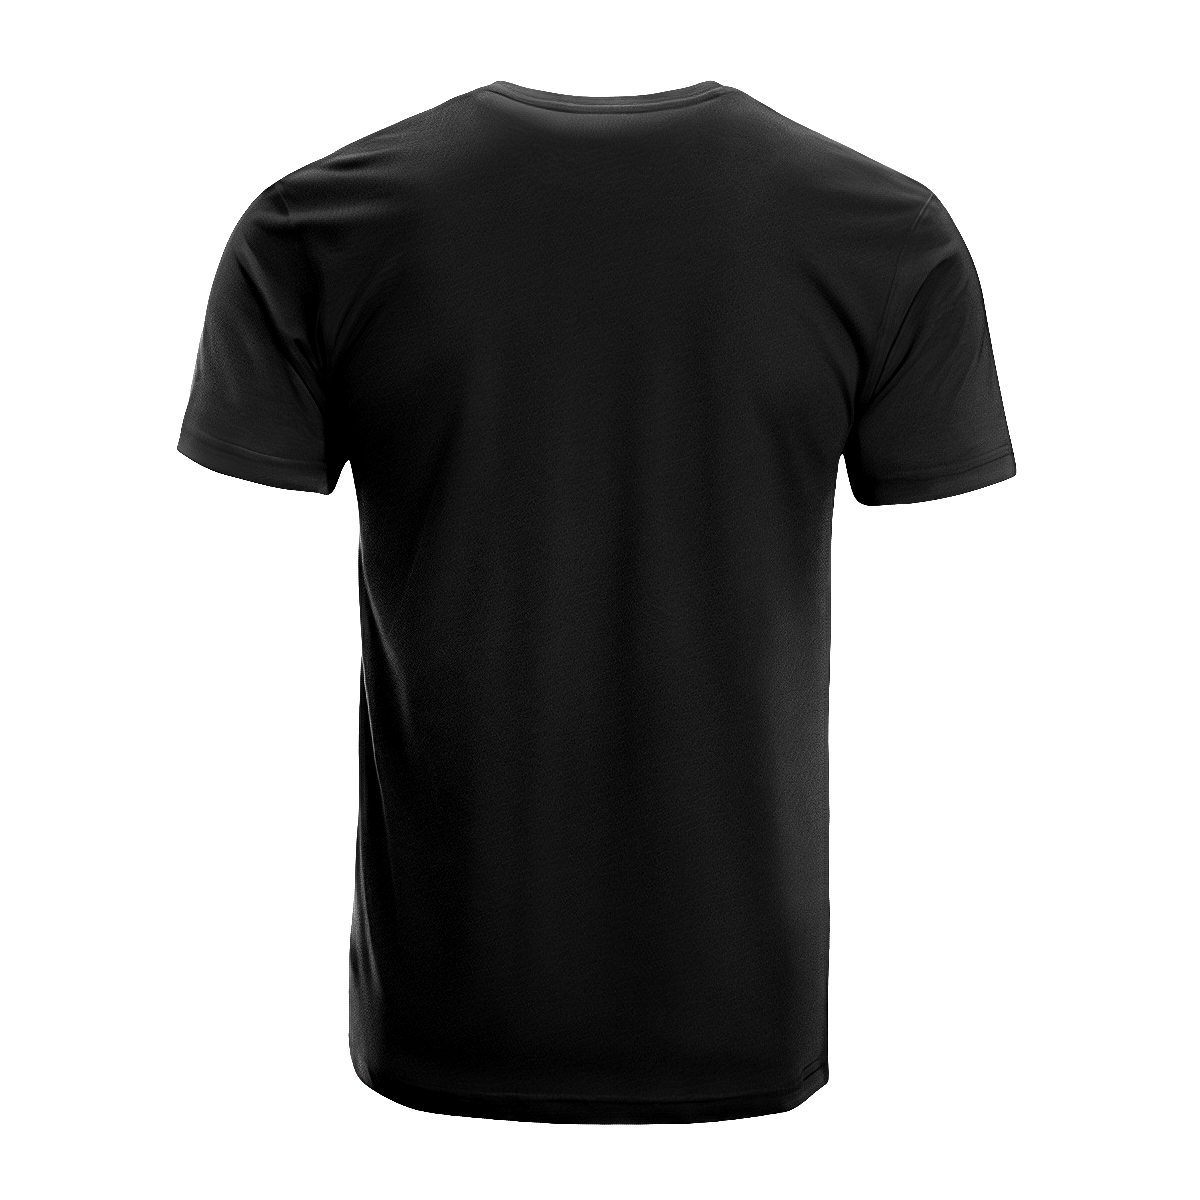 Cheyne Tartan Crest T-shirt - I'm not yelling style